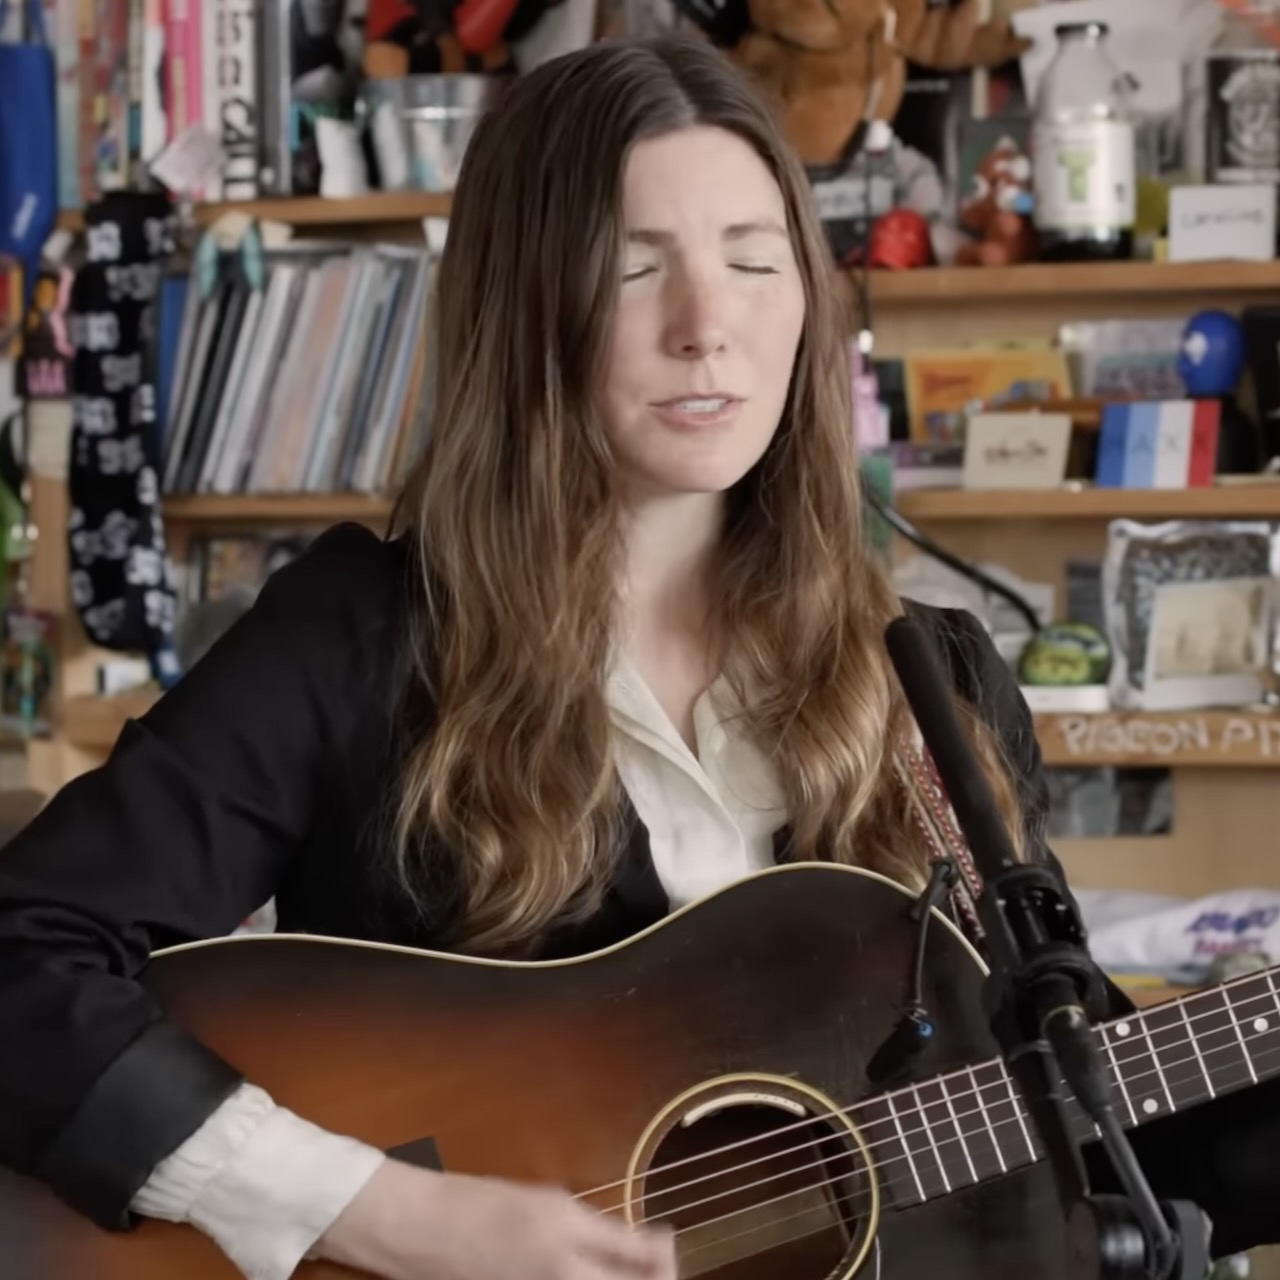 WATCH: On Acoustic Guitar, Katie Pruitt Covers Brandi Carlile's 